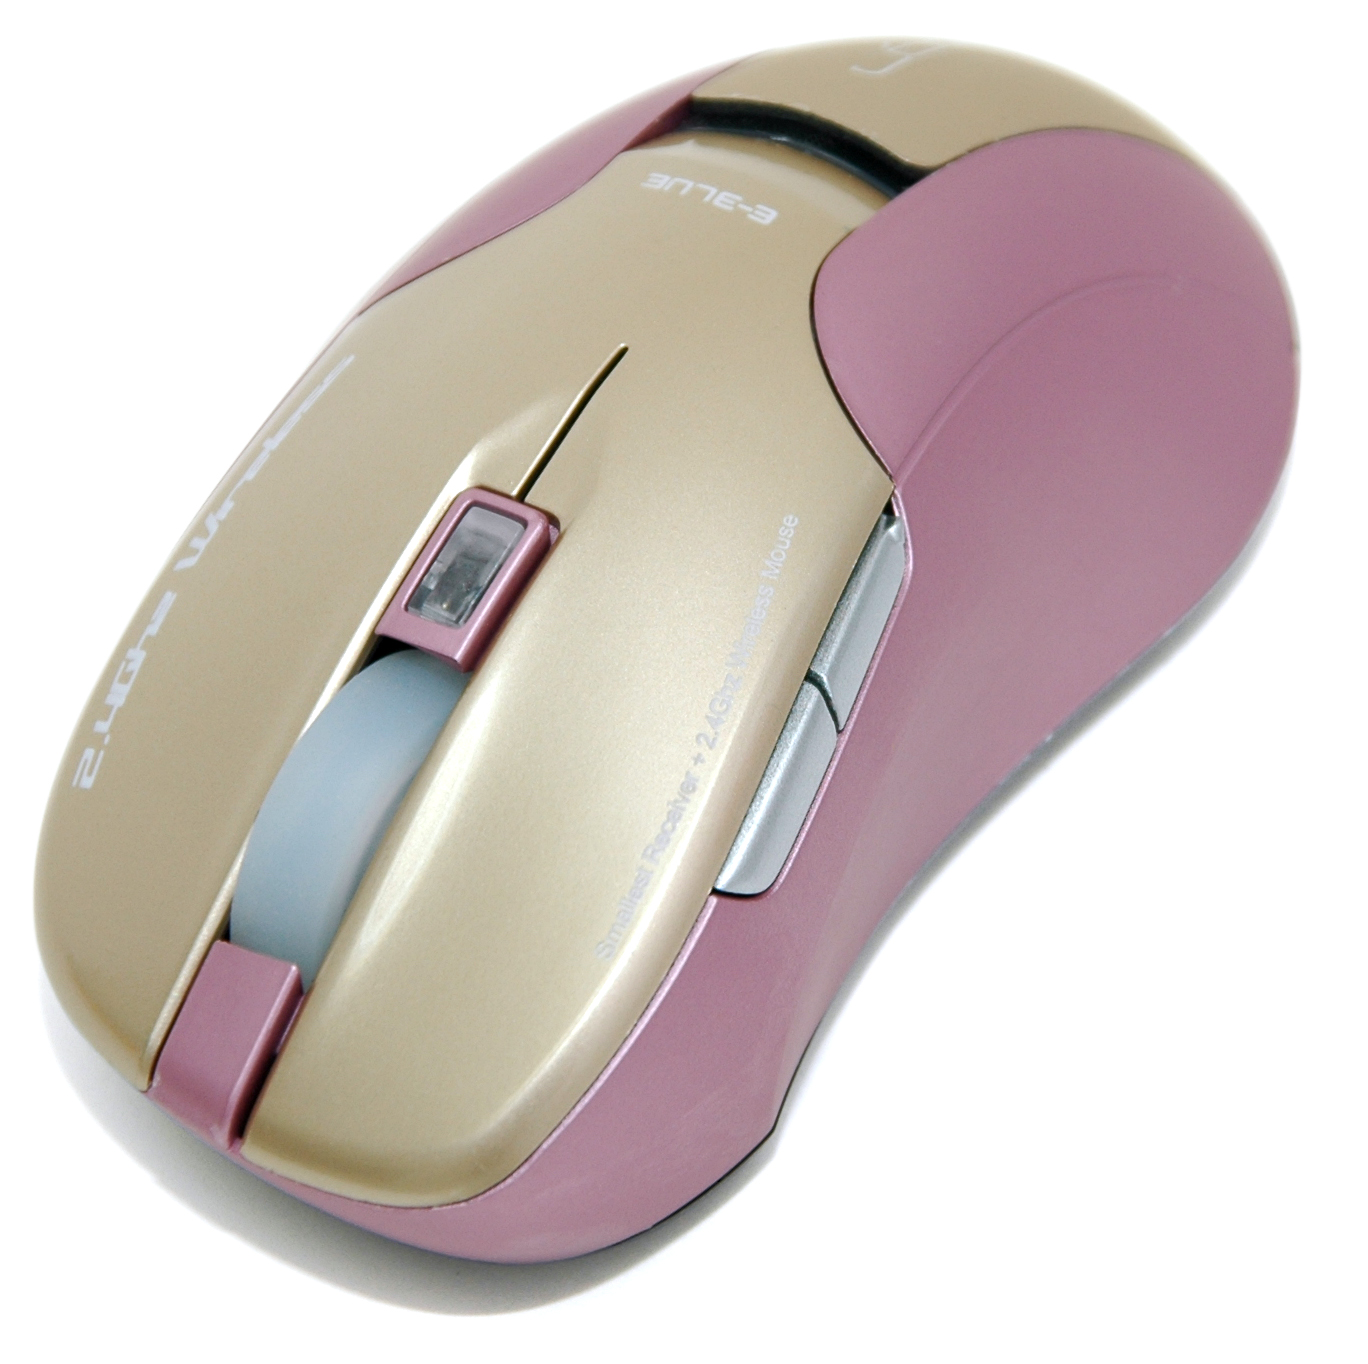 Logic 2.4G Wireless G-Laser Optical Mouse